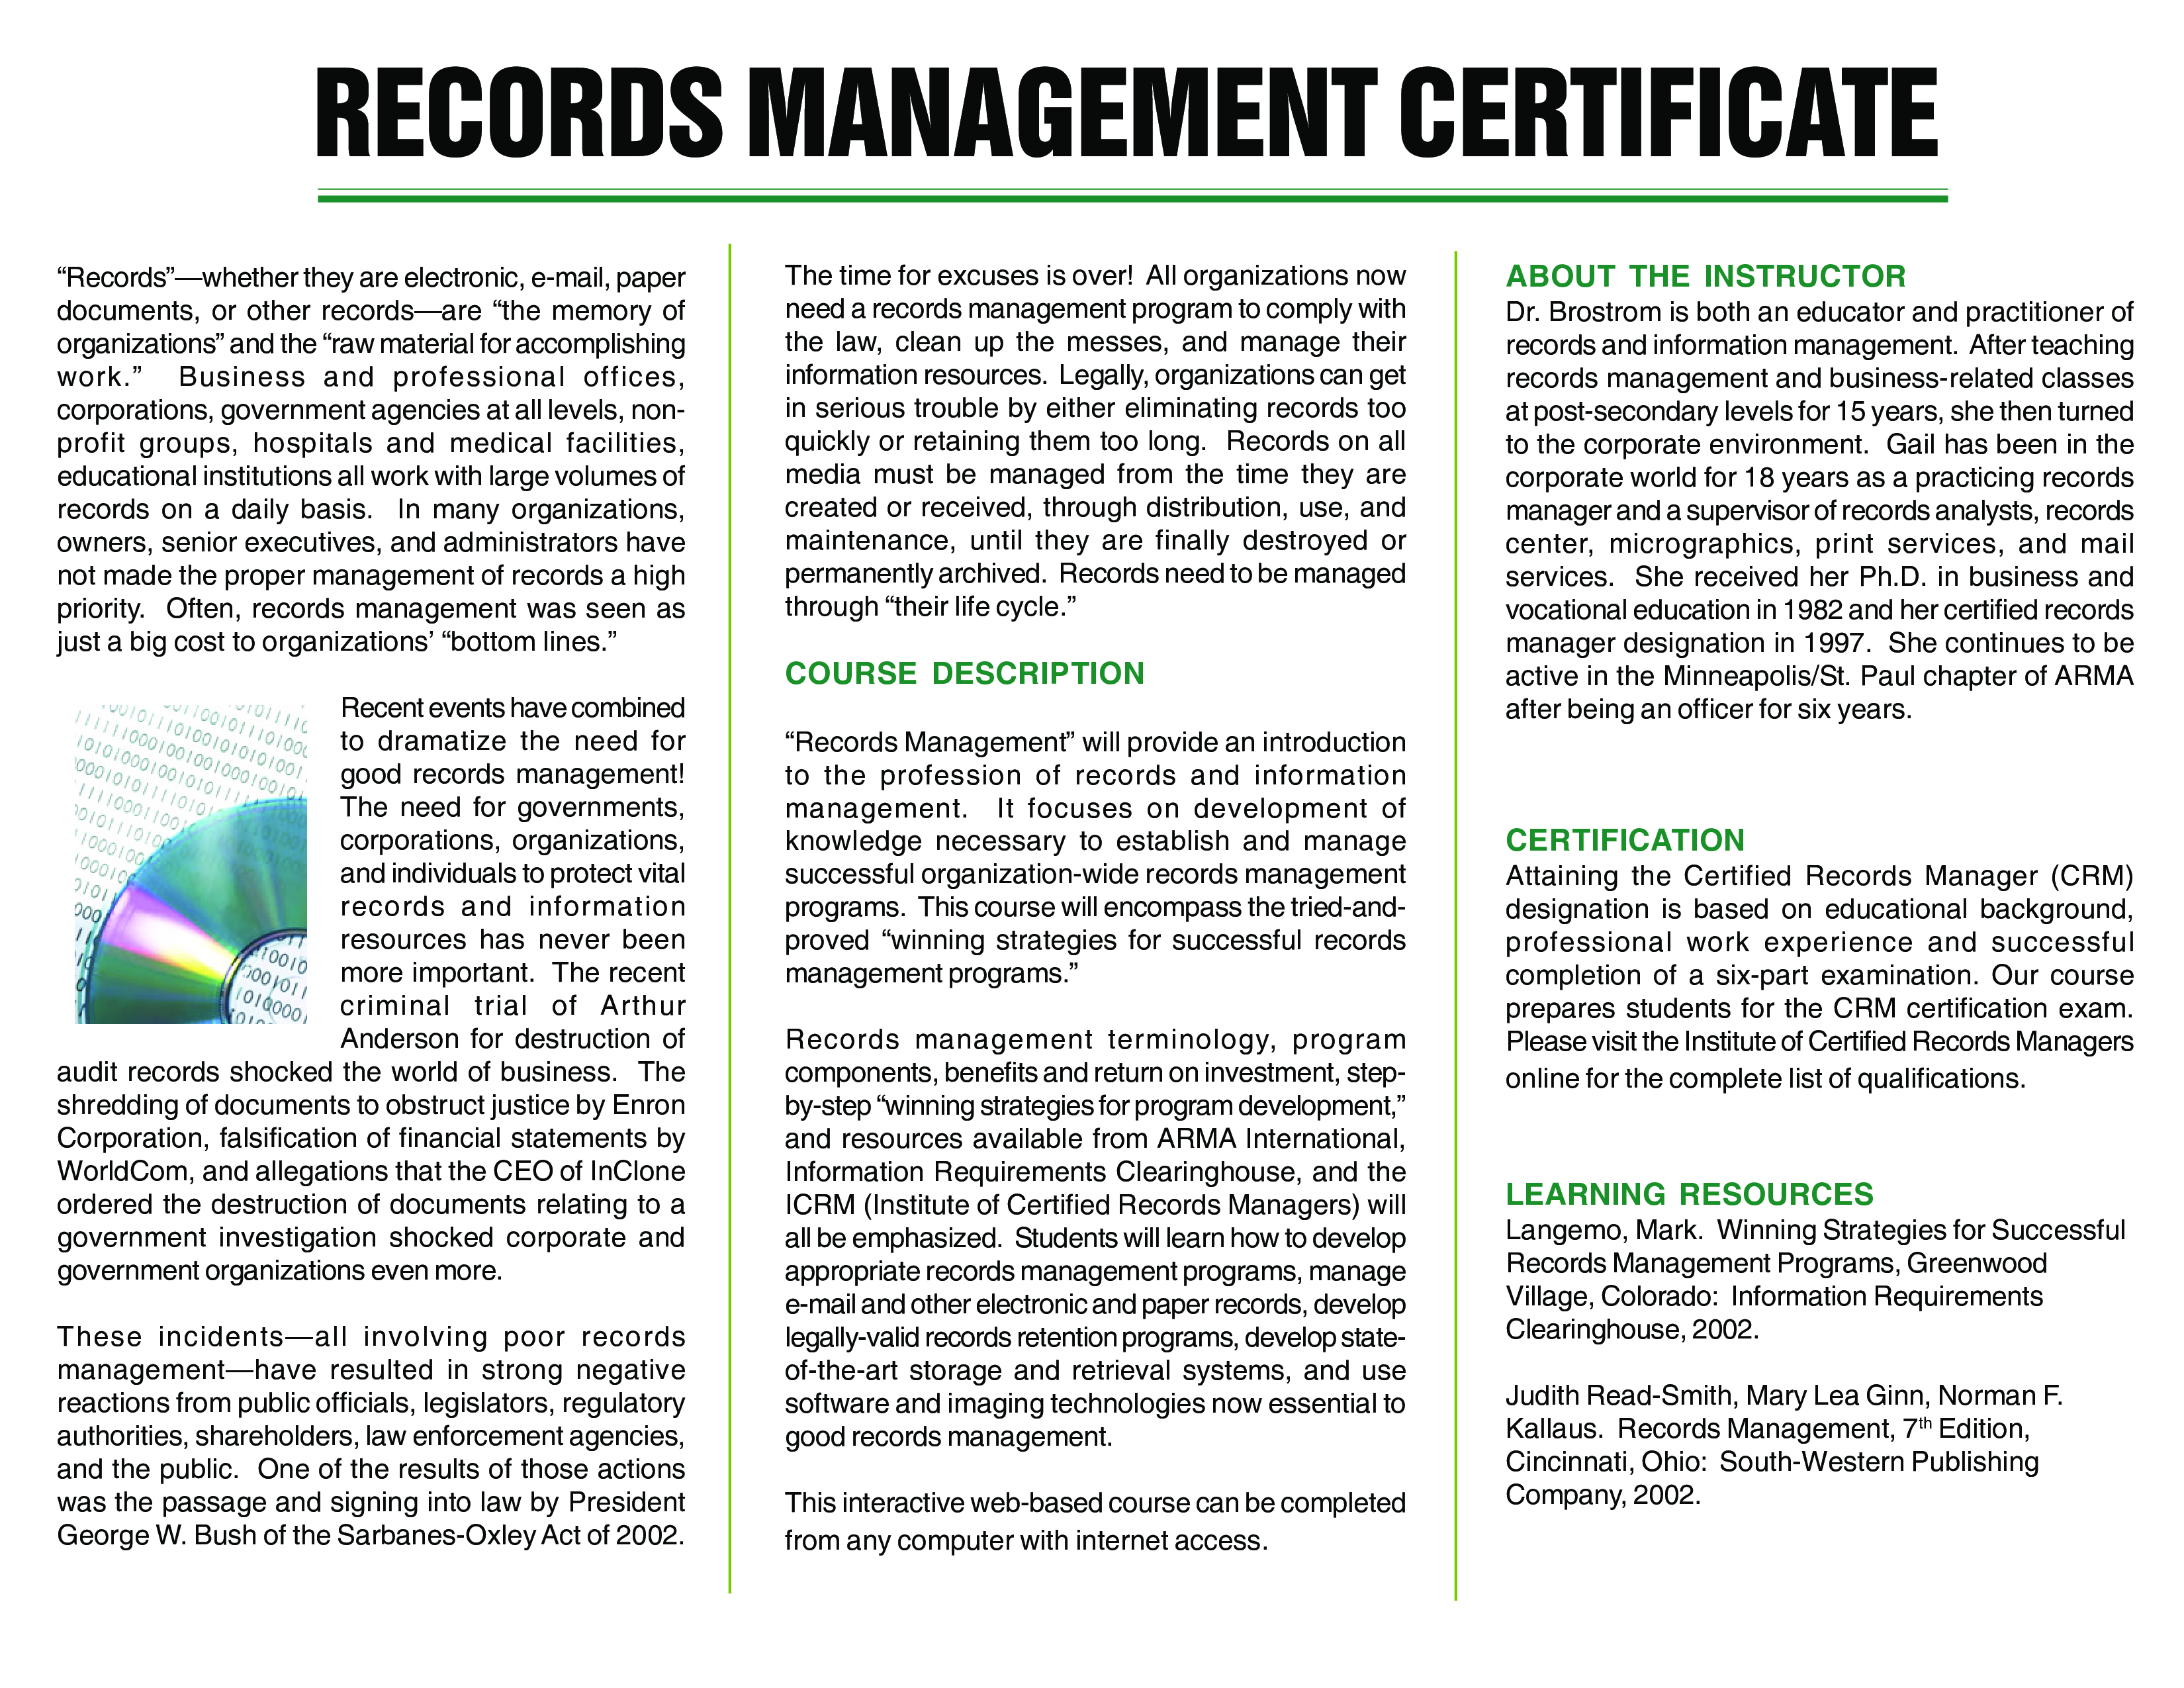 Records Management Training Certificate 模板